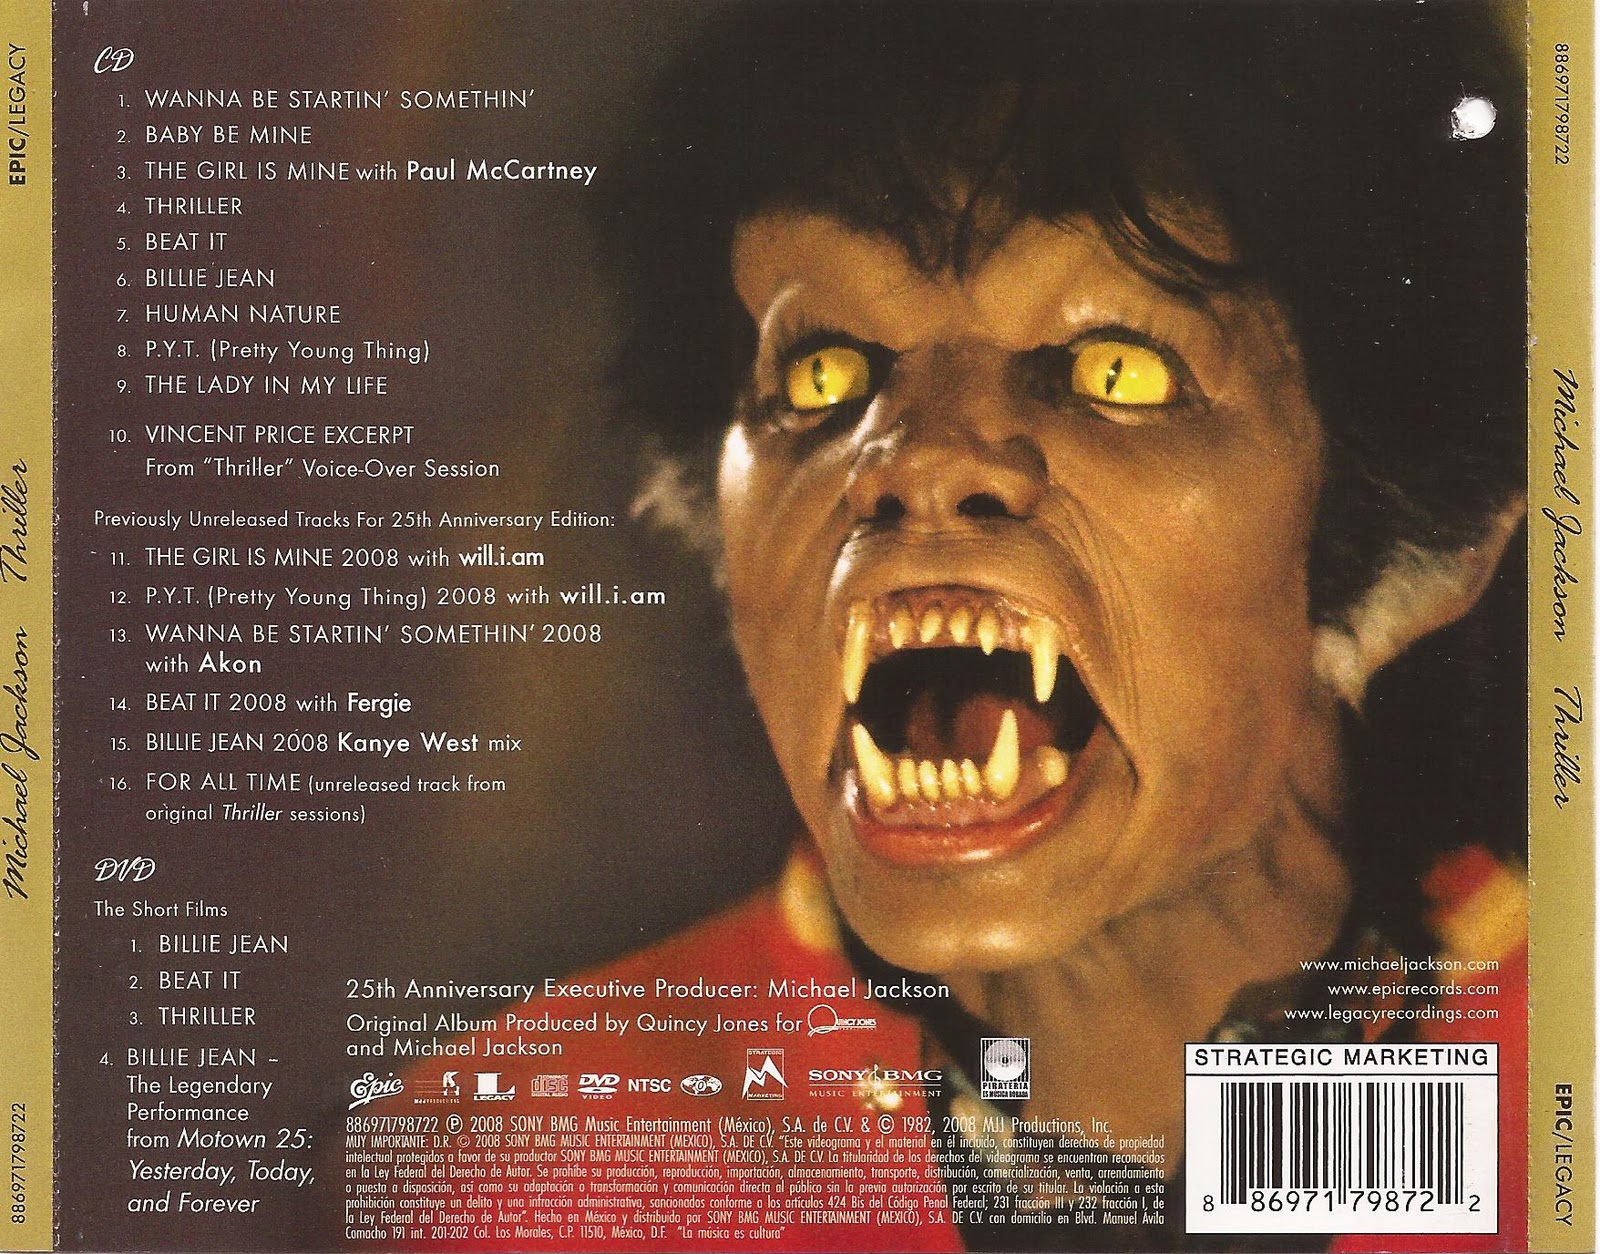 http://4.bp.blogspot.com/-MmoUHXyMQWg/TqY5_zaltXI/AAAAAAAAAnY/AuIVomPM4U0/s1600/Contraportada+Michael+Jackson+Thriller+25.jpg